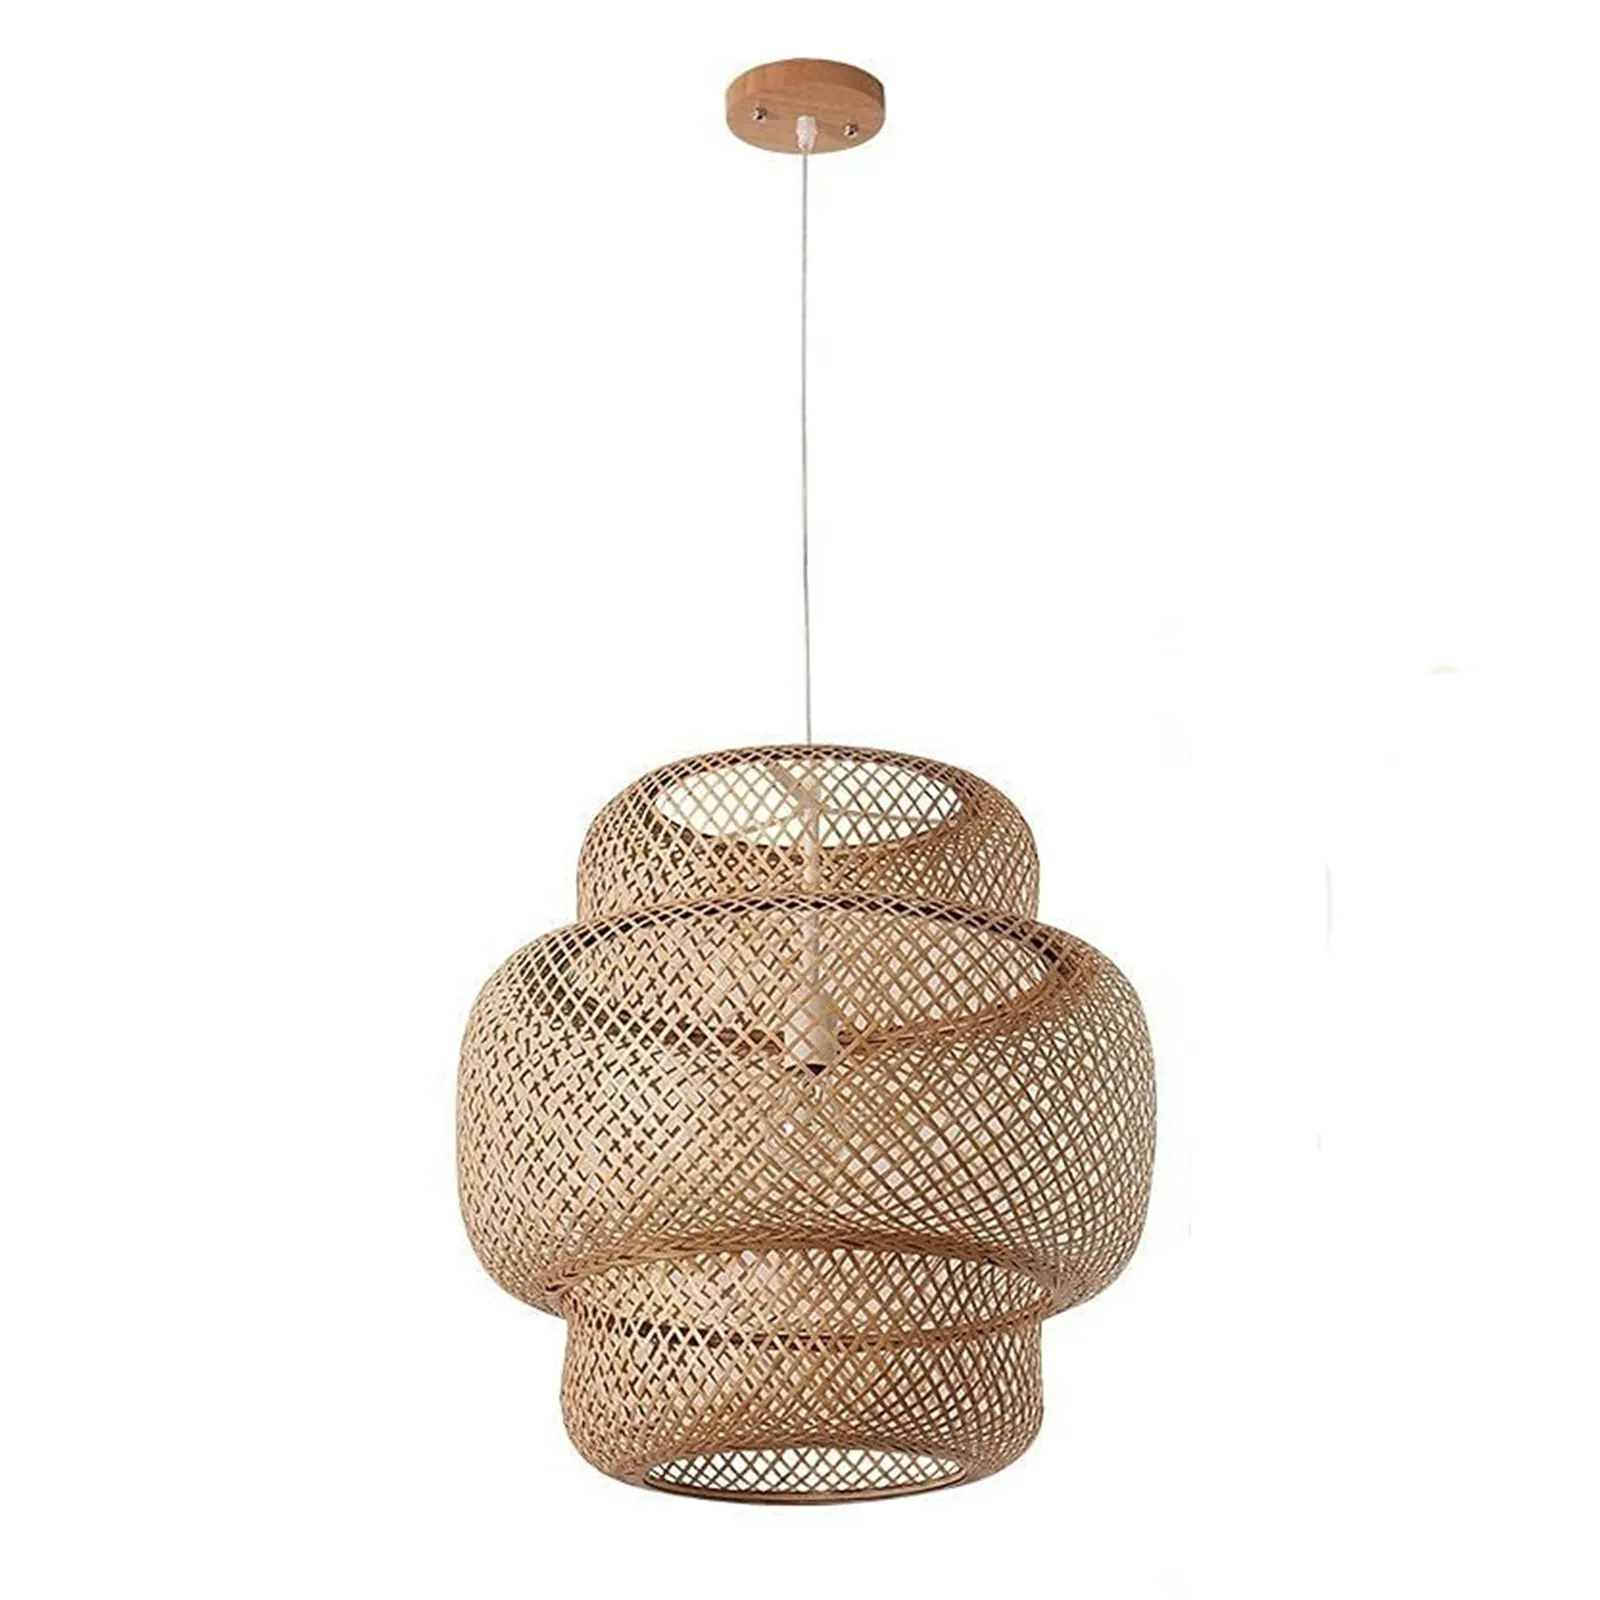 Bamboo Lighting Straw Rustic Rattan Pendant Light Fixture Wicker Lamp Shade Basket Woven Chandelier for Dining Room Living Room